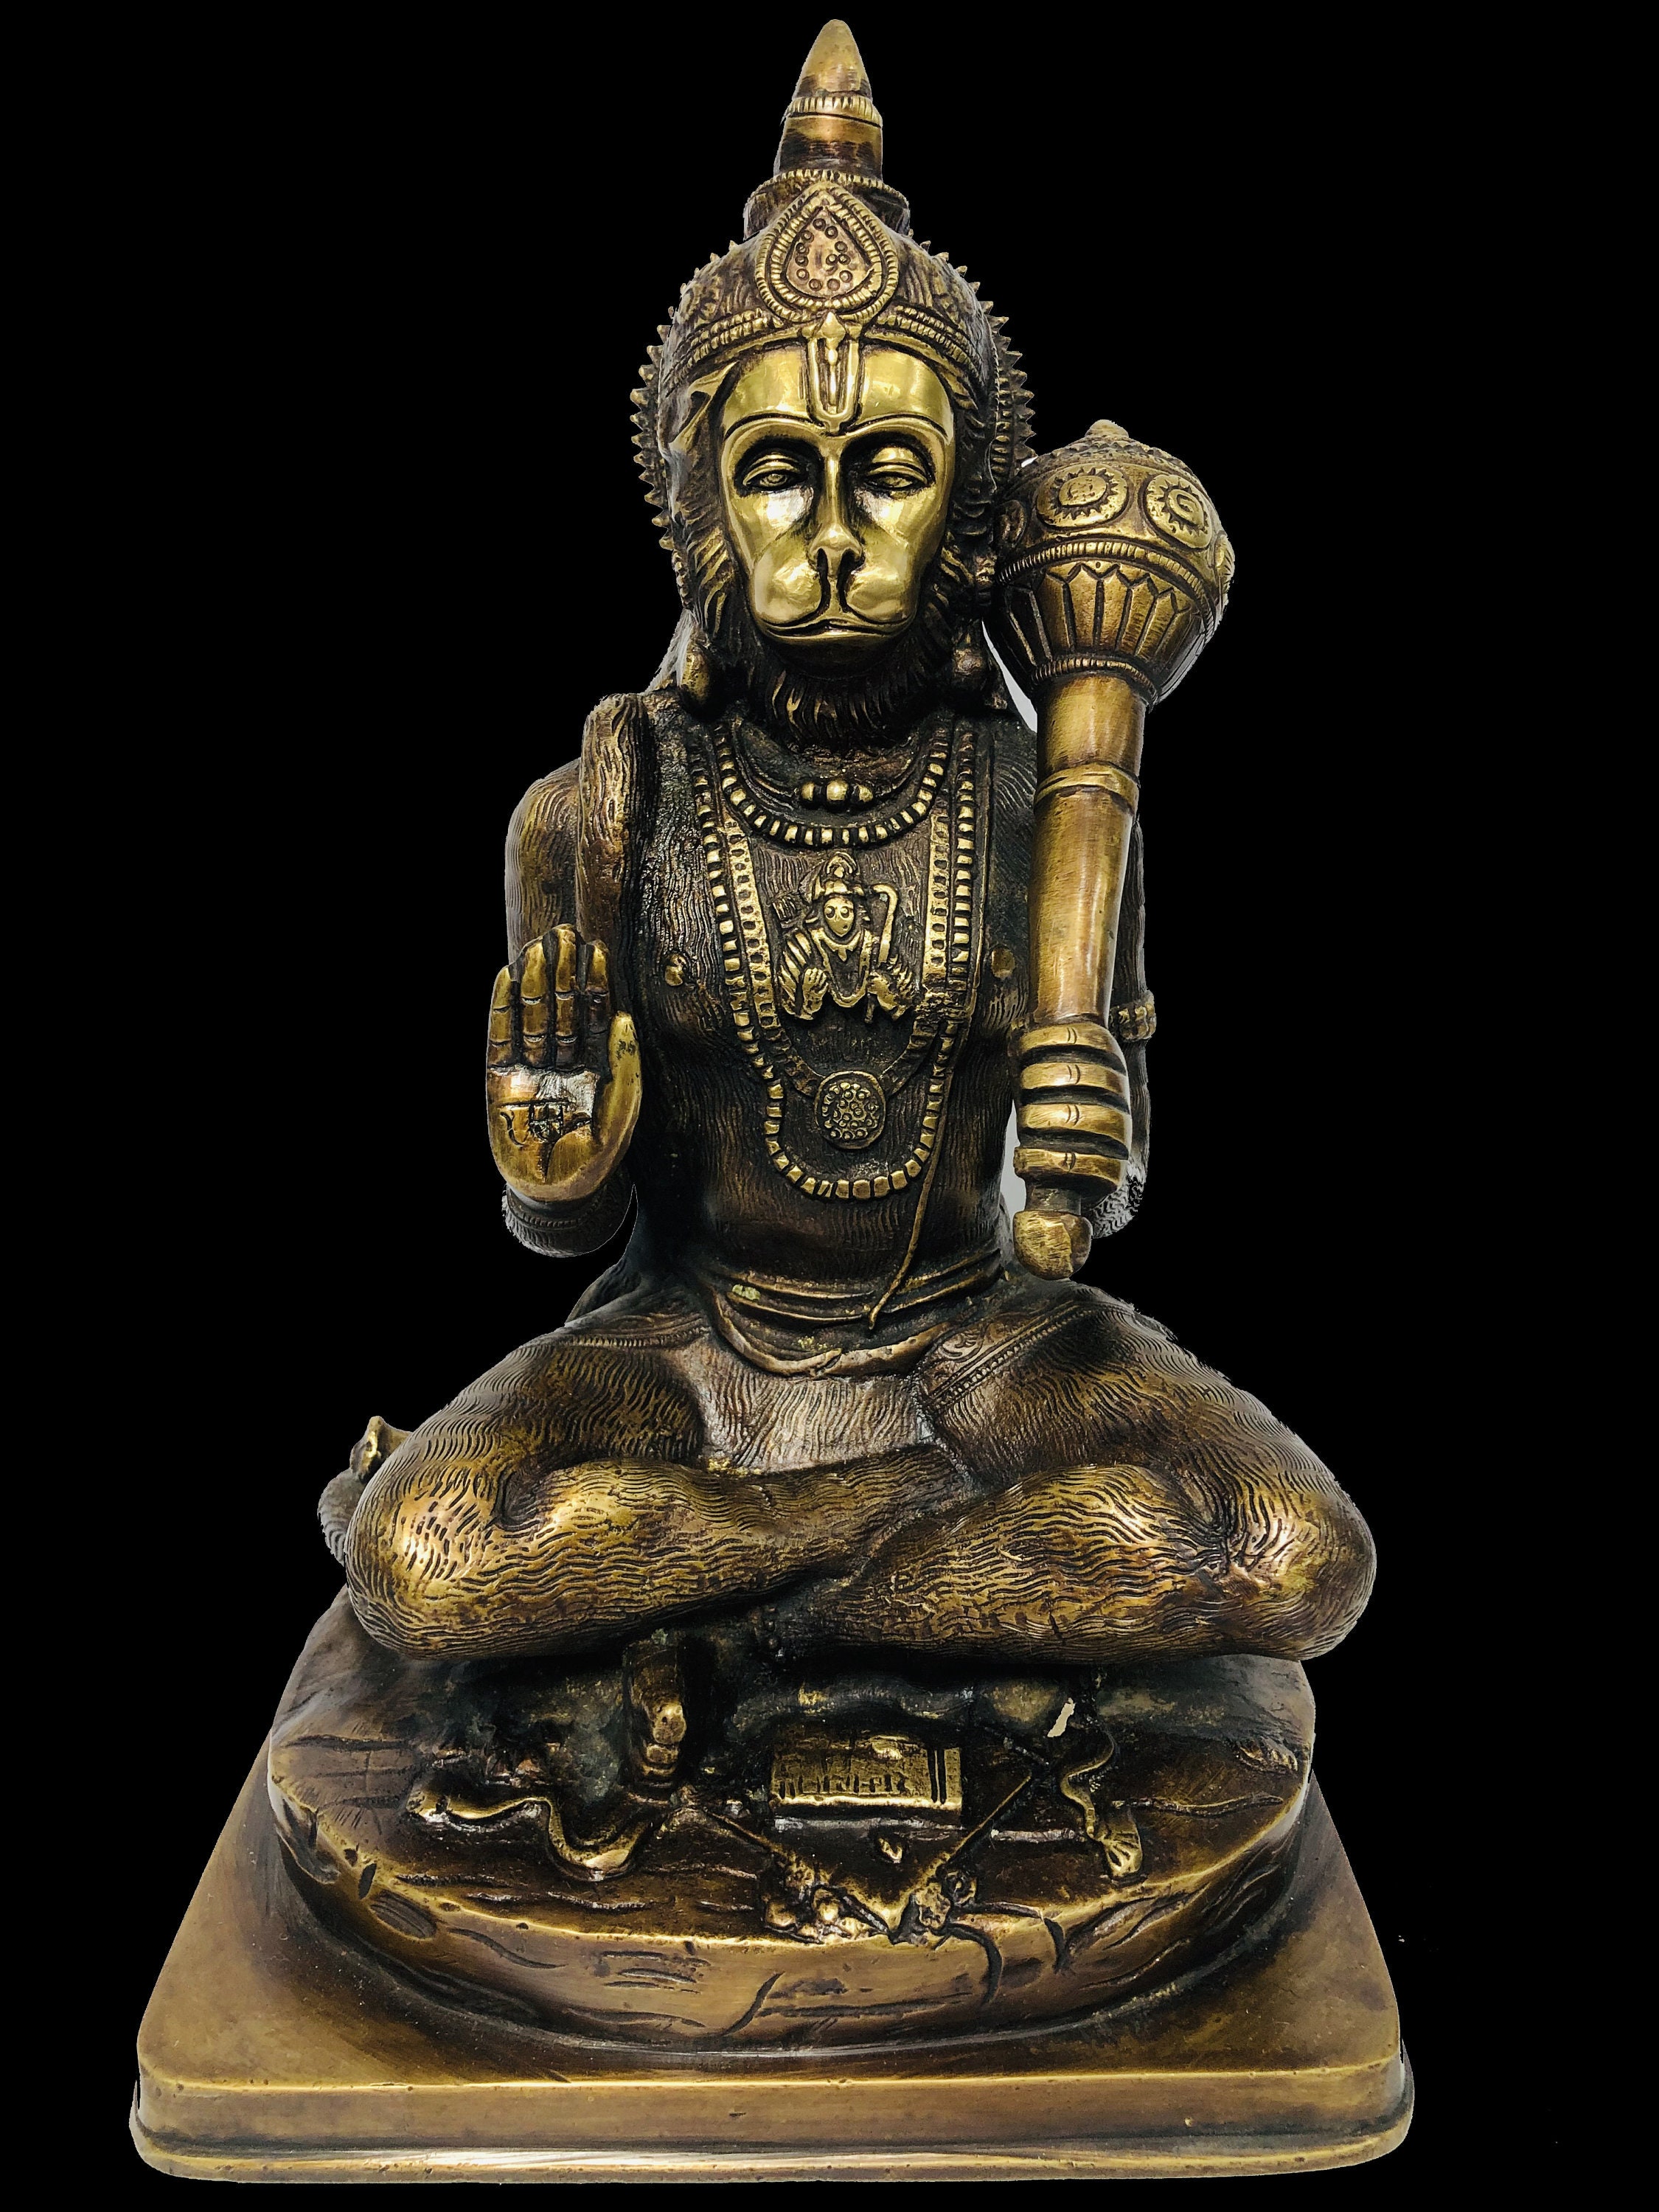 11 hanuman statue medidating Hanuman-Monkey God Hindu | Etsy